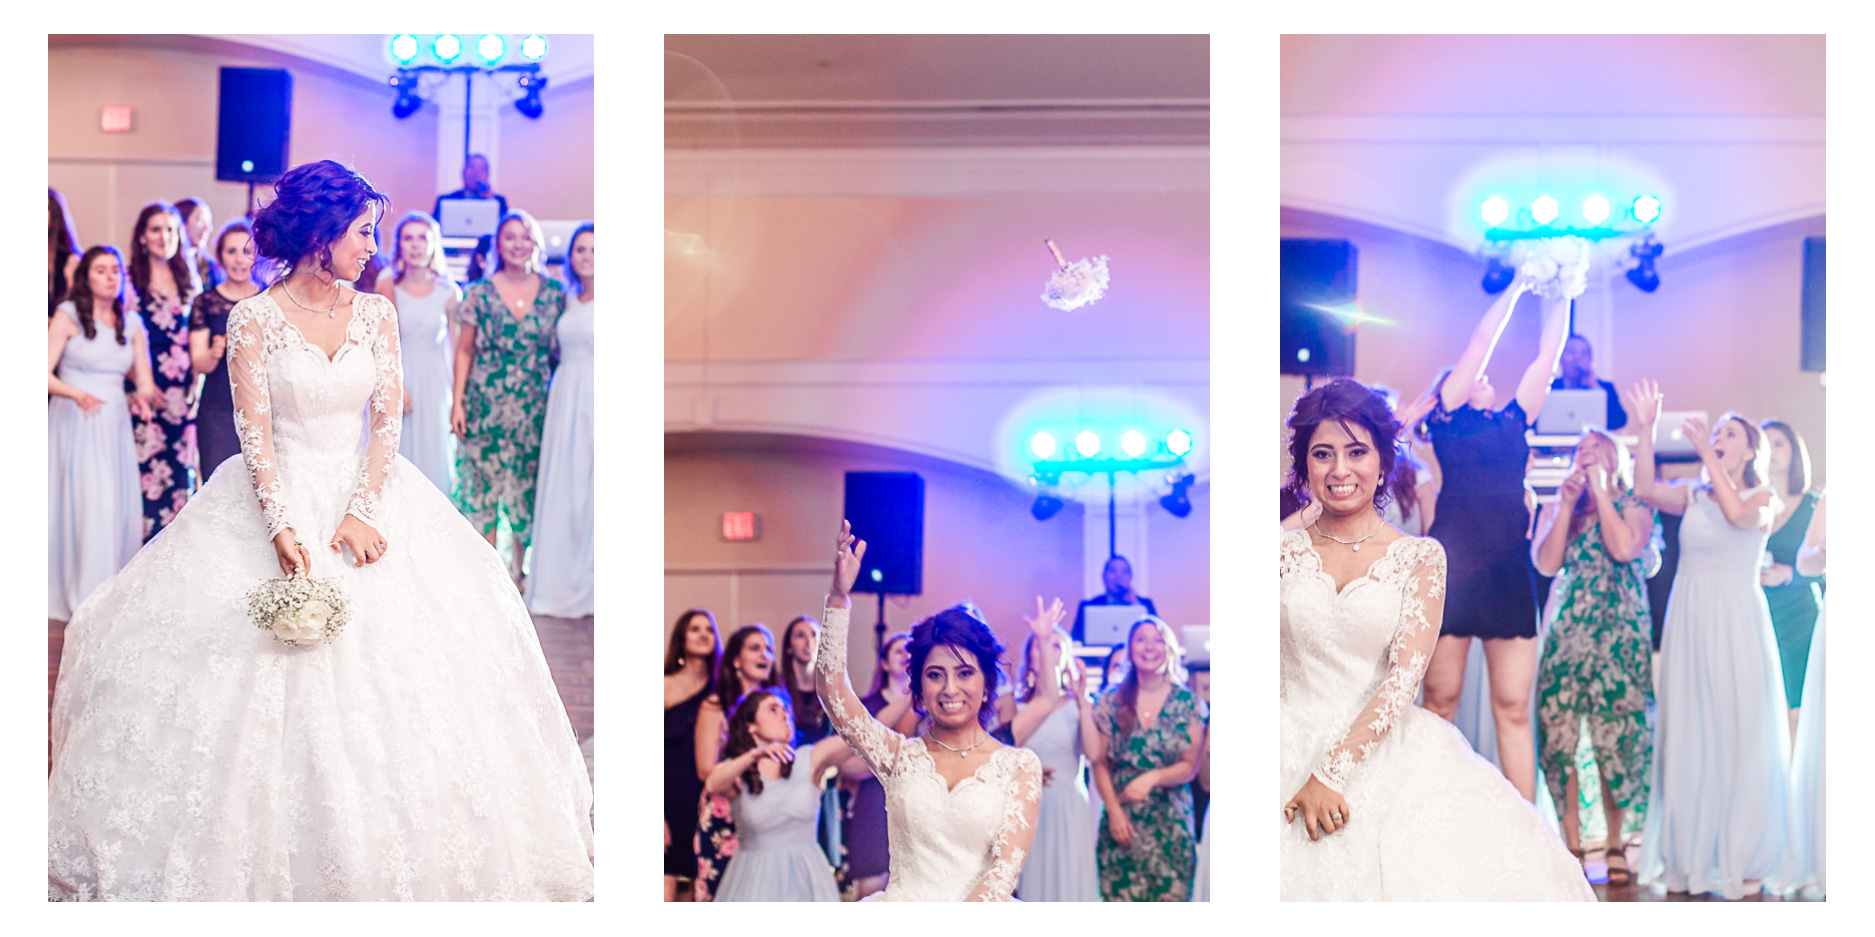 bride-throwing-bouqet-wedding-reception-foxhchase-manor-manassas-virginia.jpg